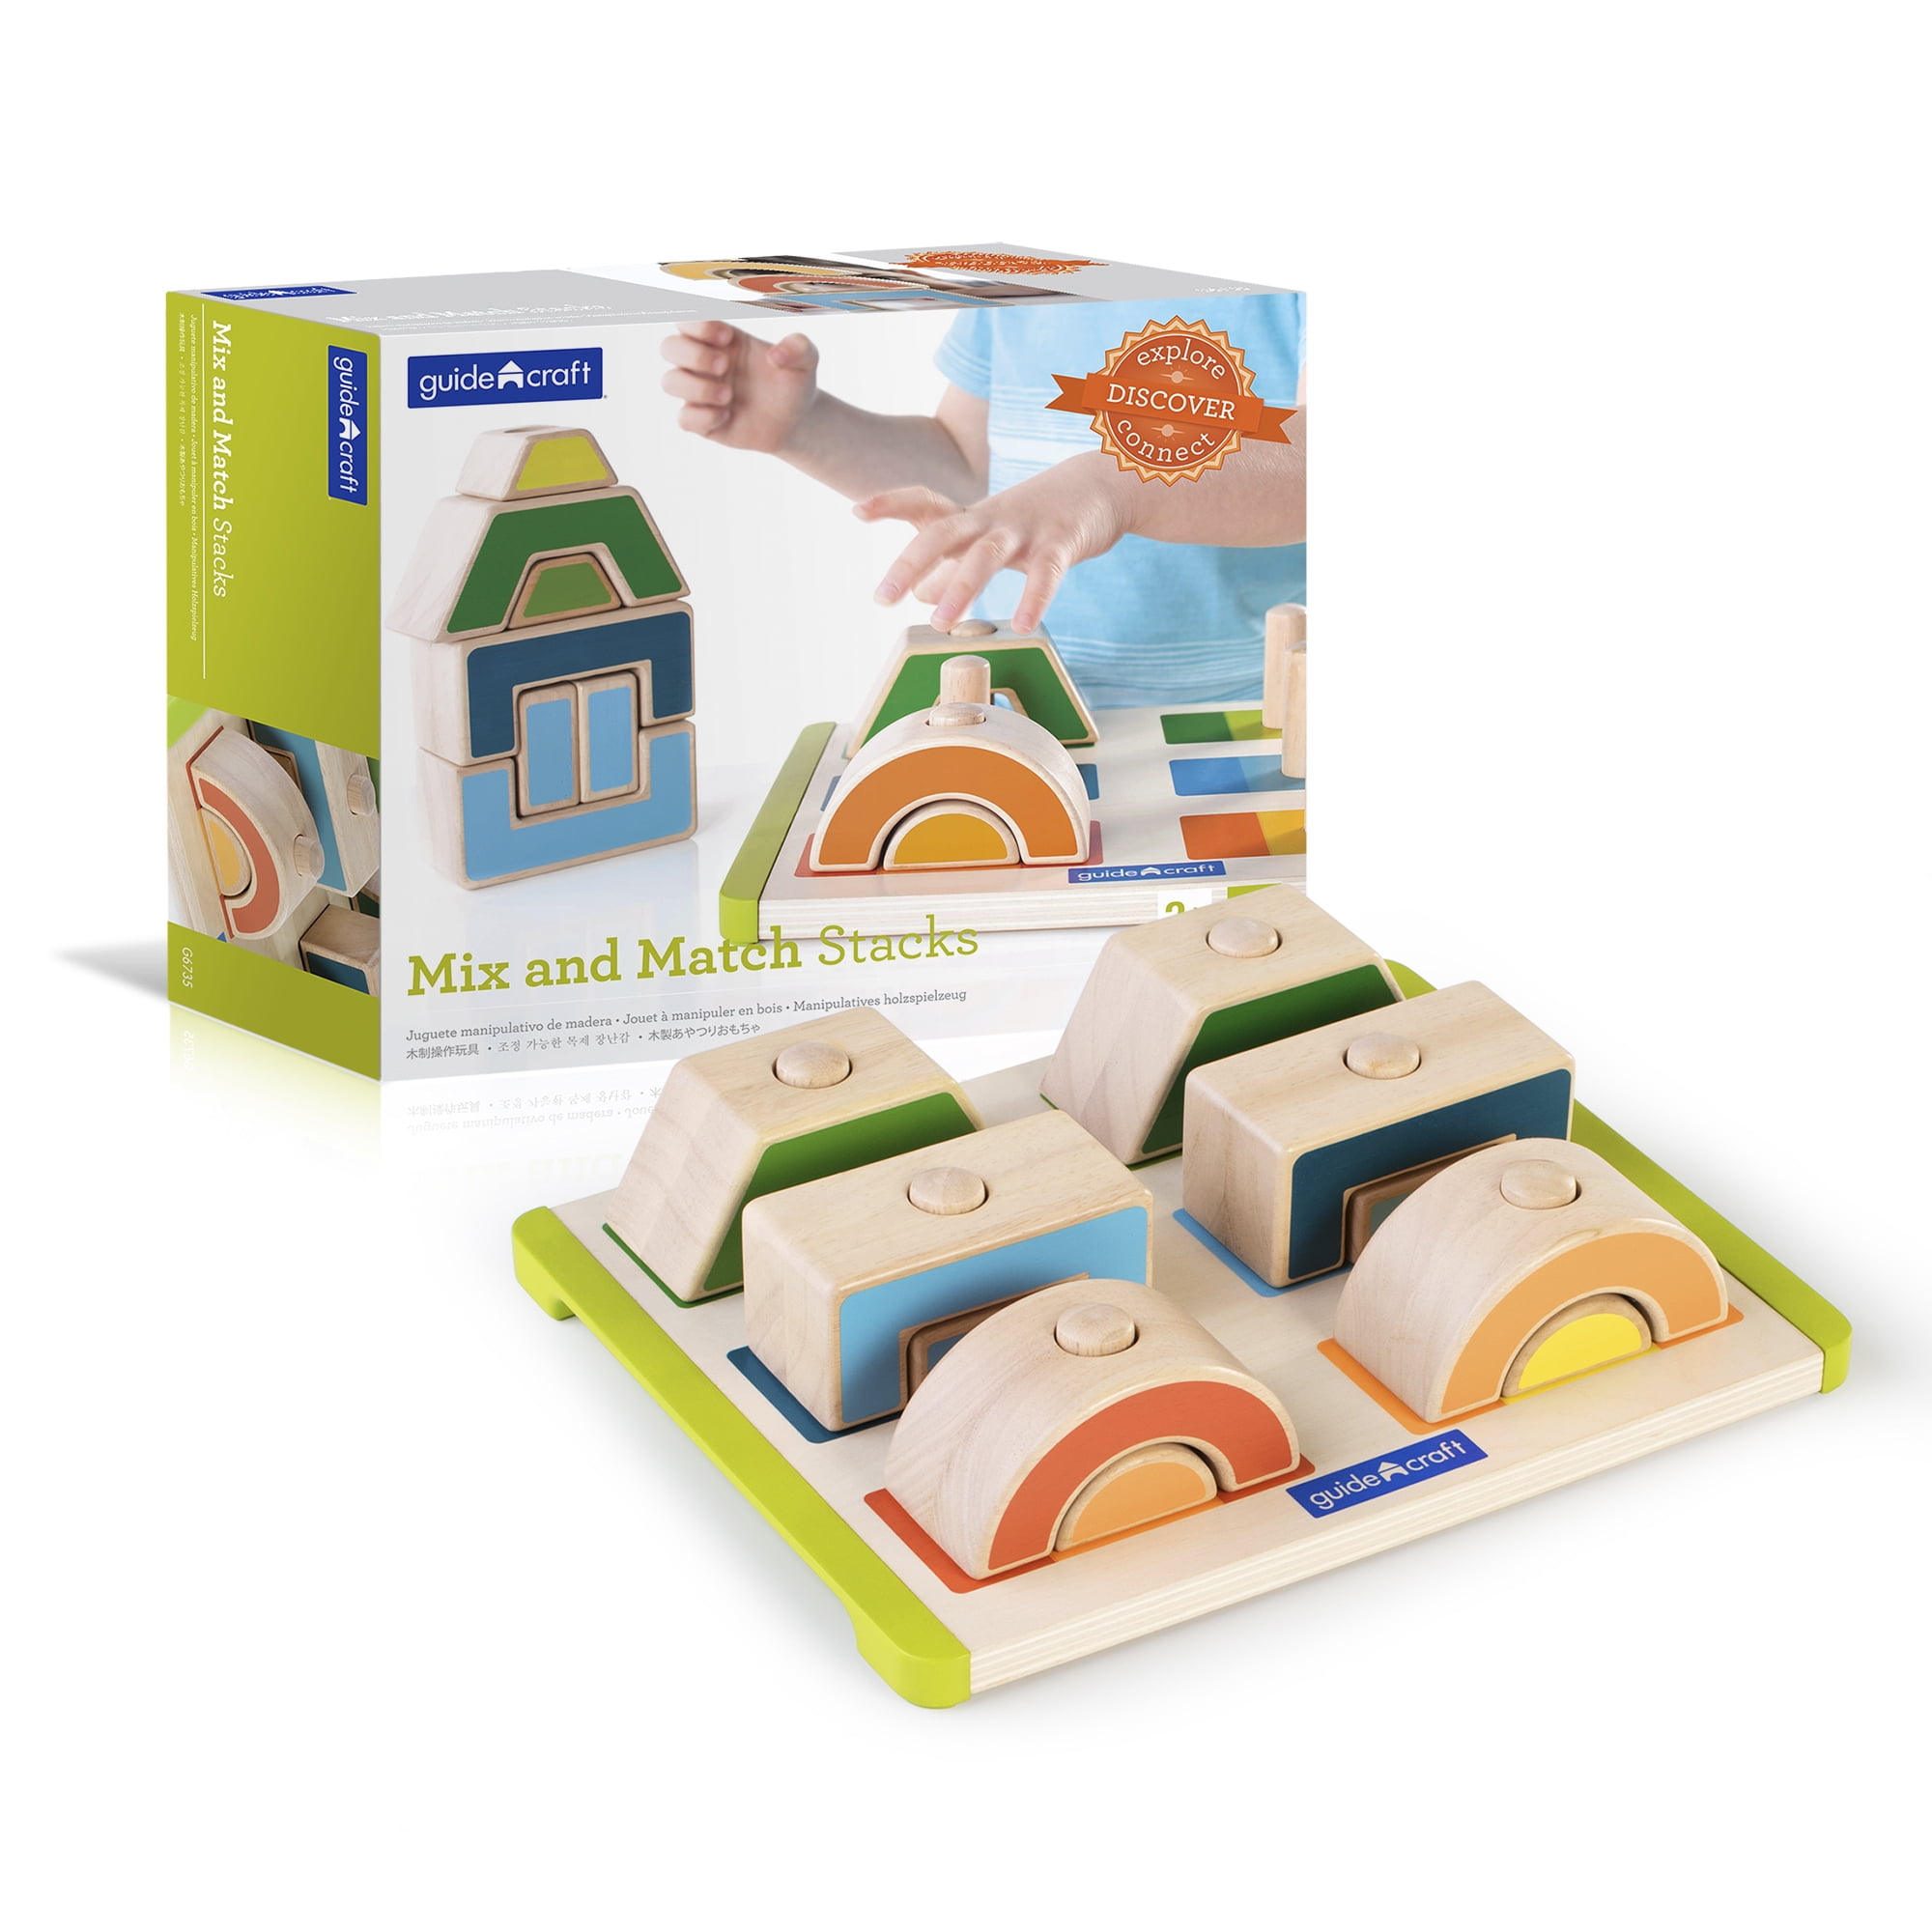 Guidecraft Mix and Match Stacks: Manipulative Toddler Toy